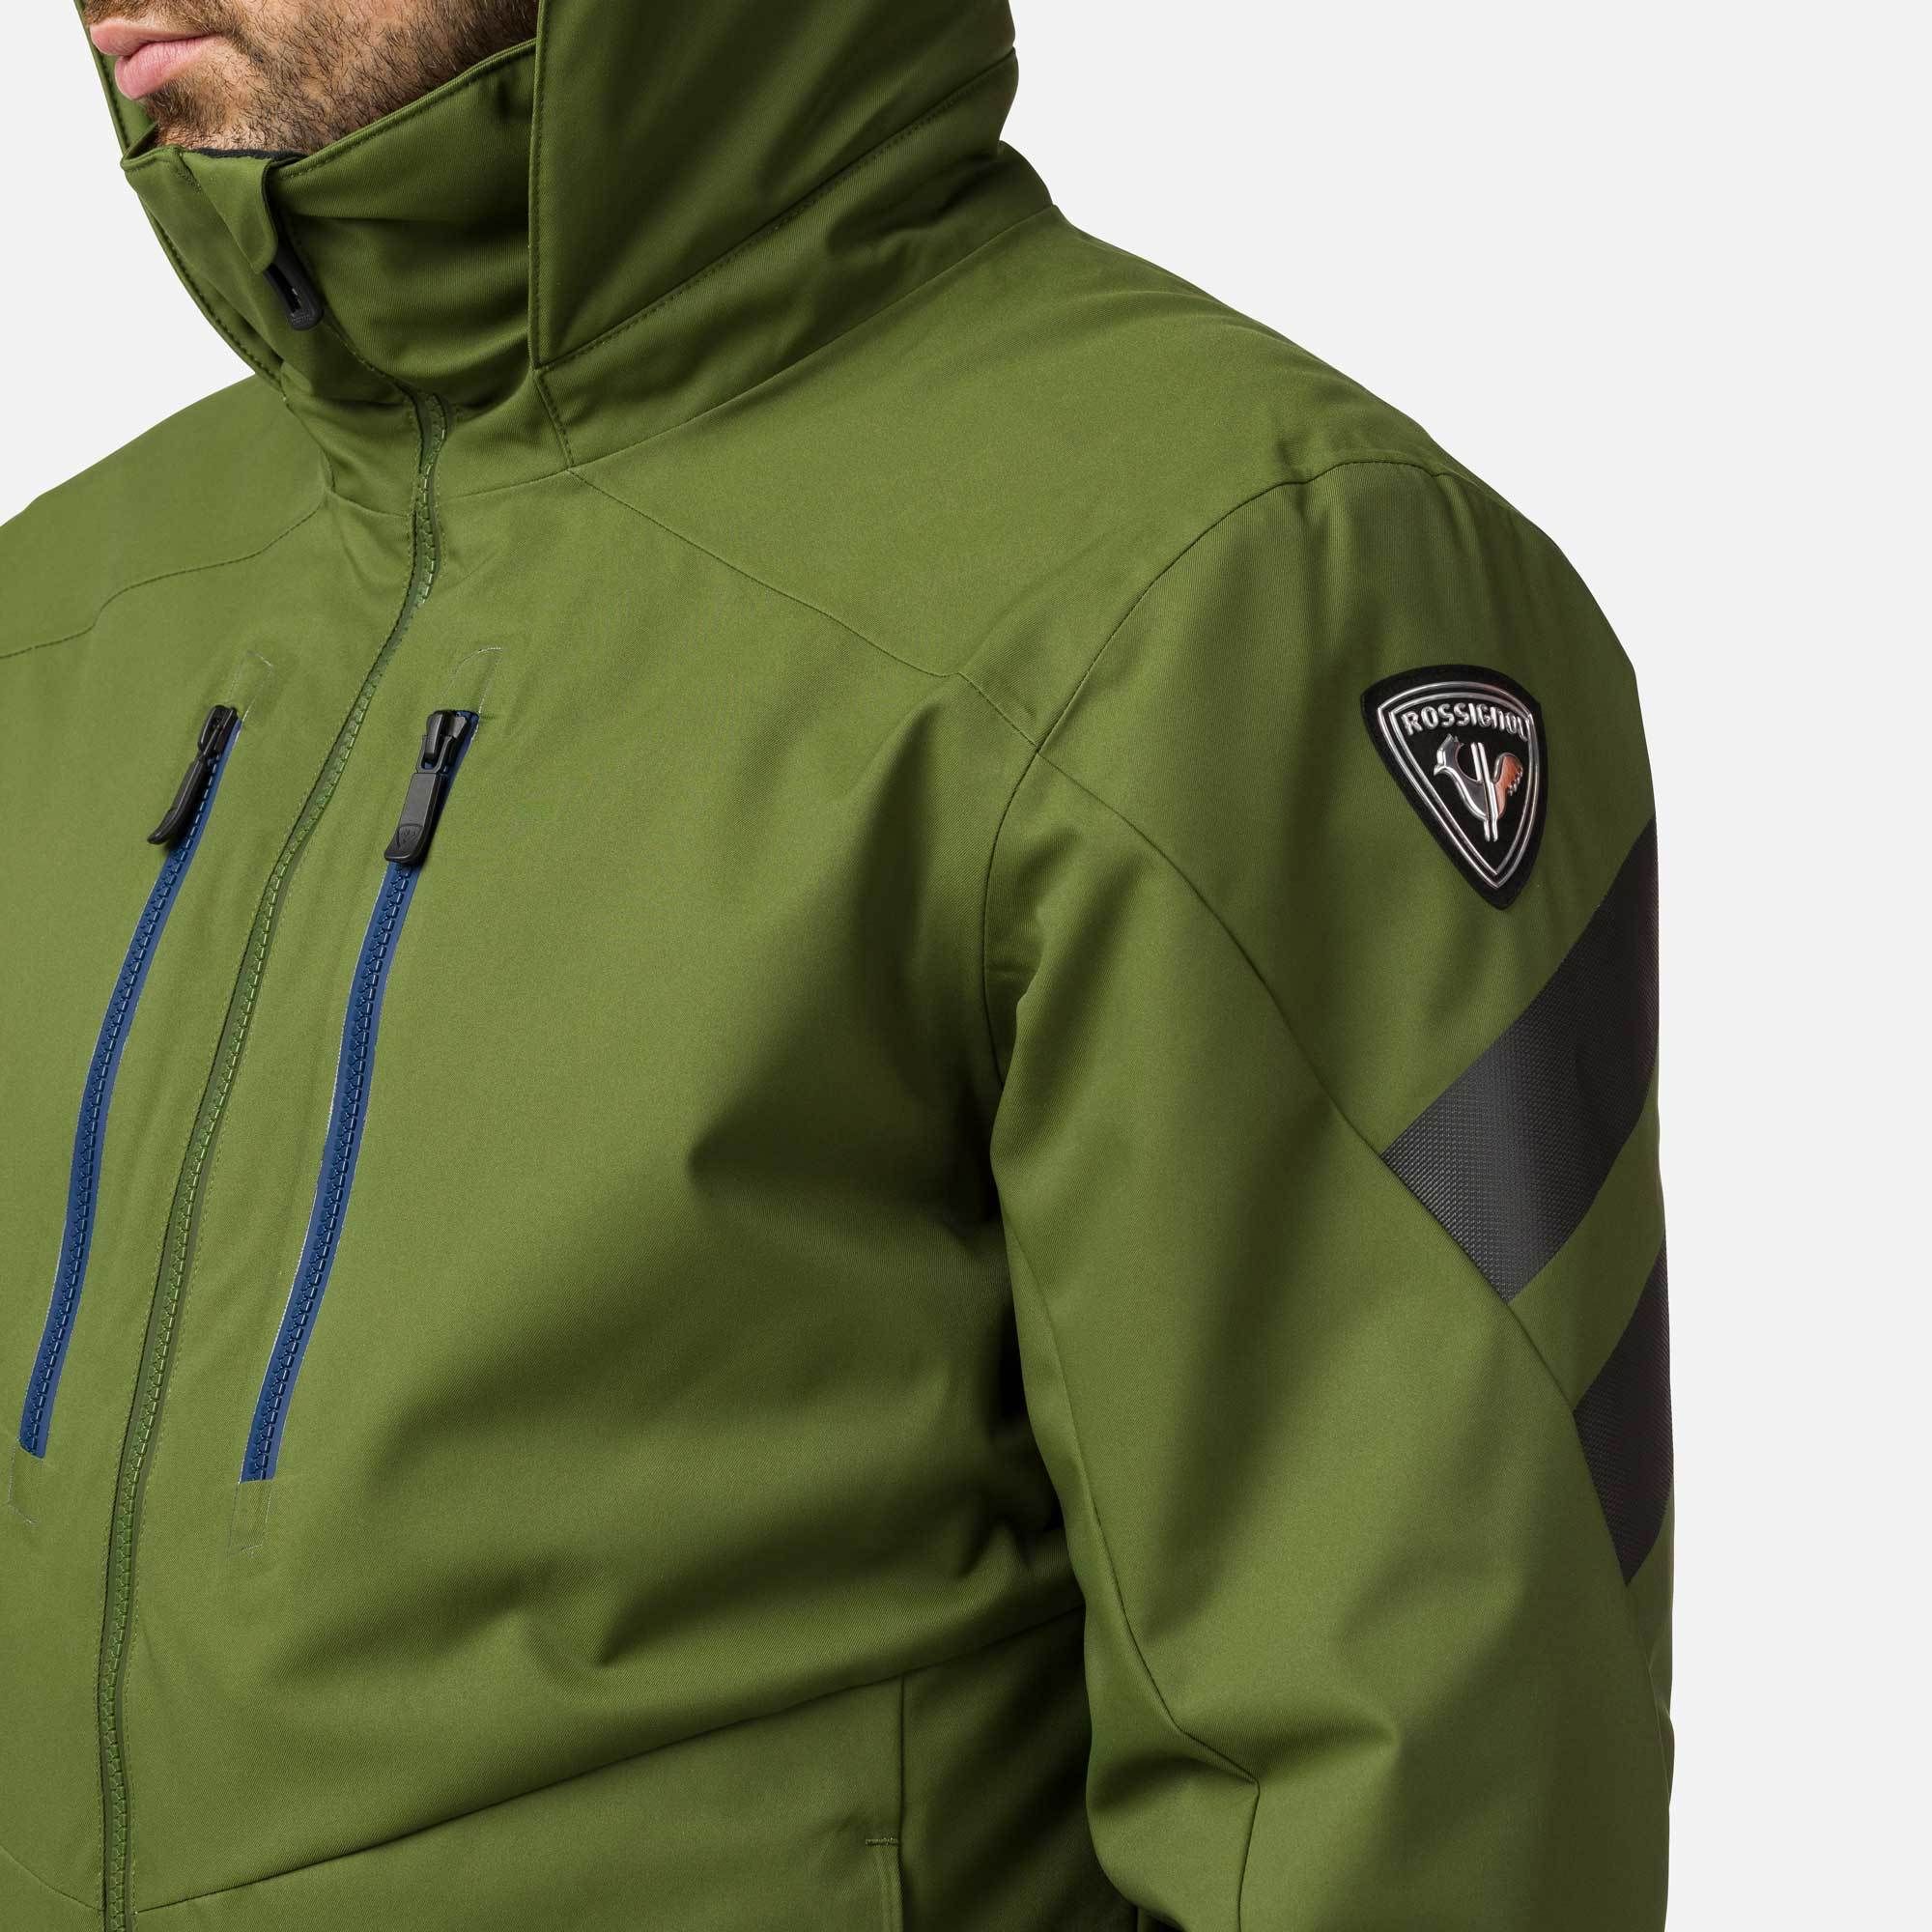 Rossignol Mens Fonction Ski Jacket – Size Medium – Snow Sports Jacket